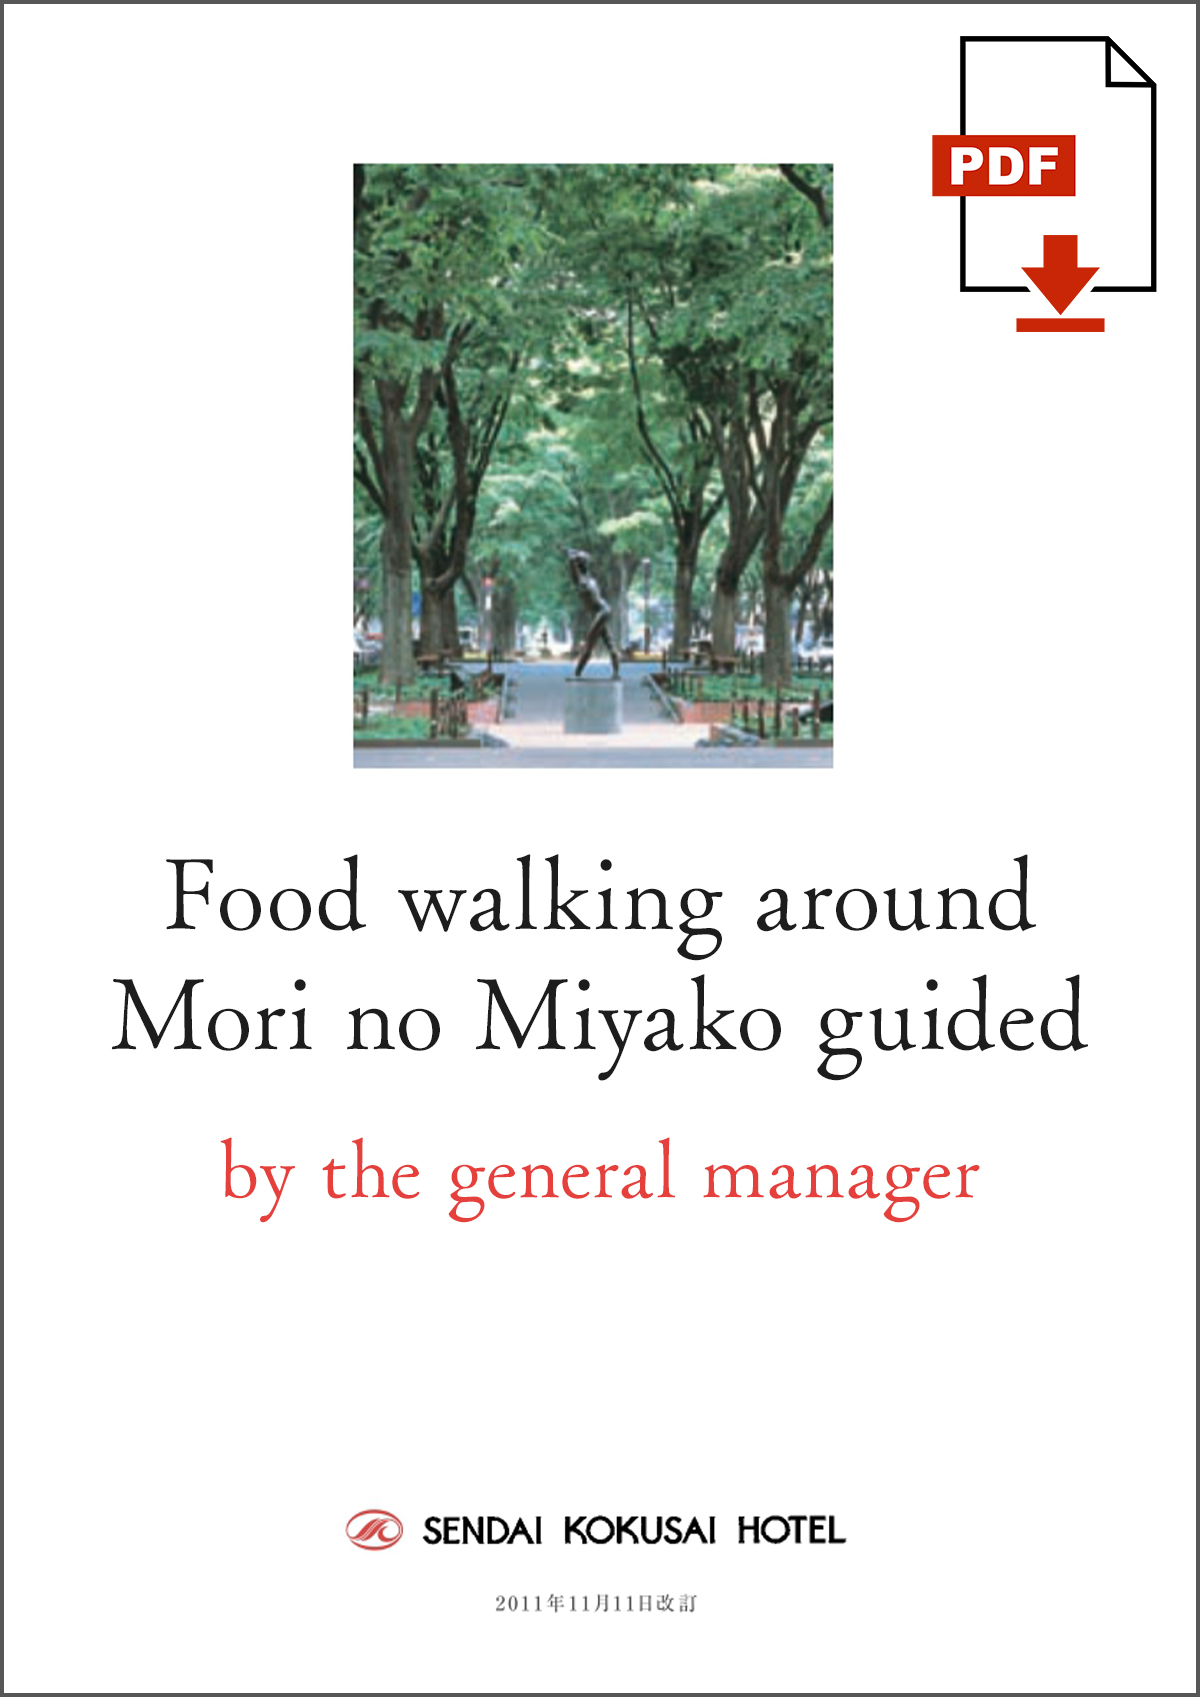 Food walking around Mori no Miyako guided by the general manager